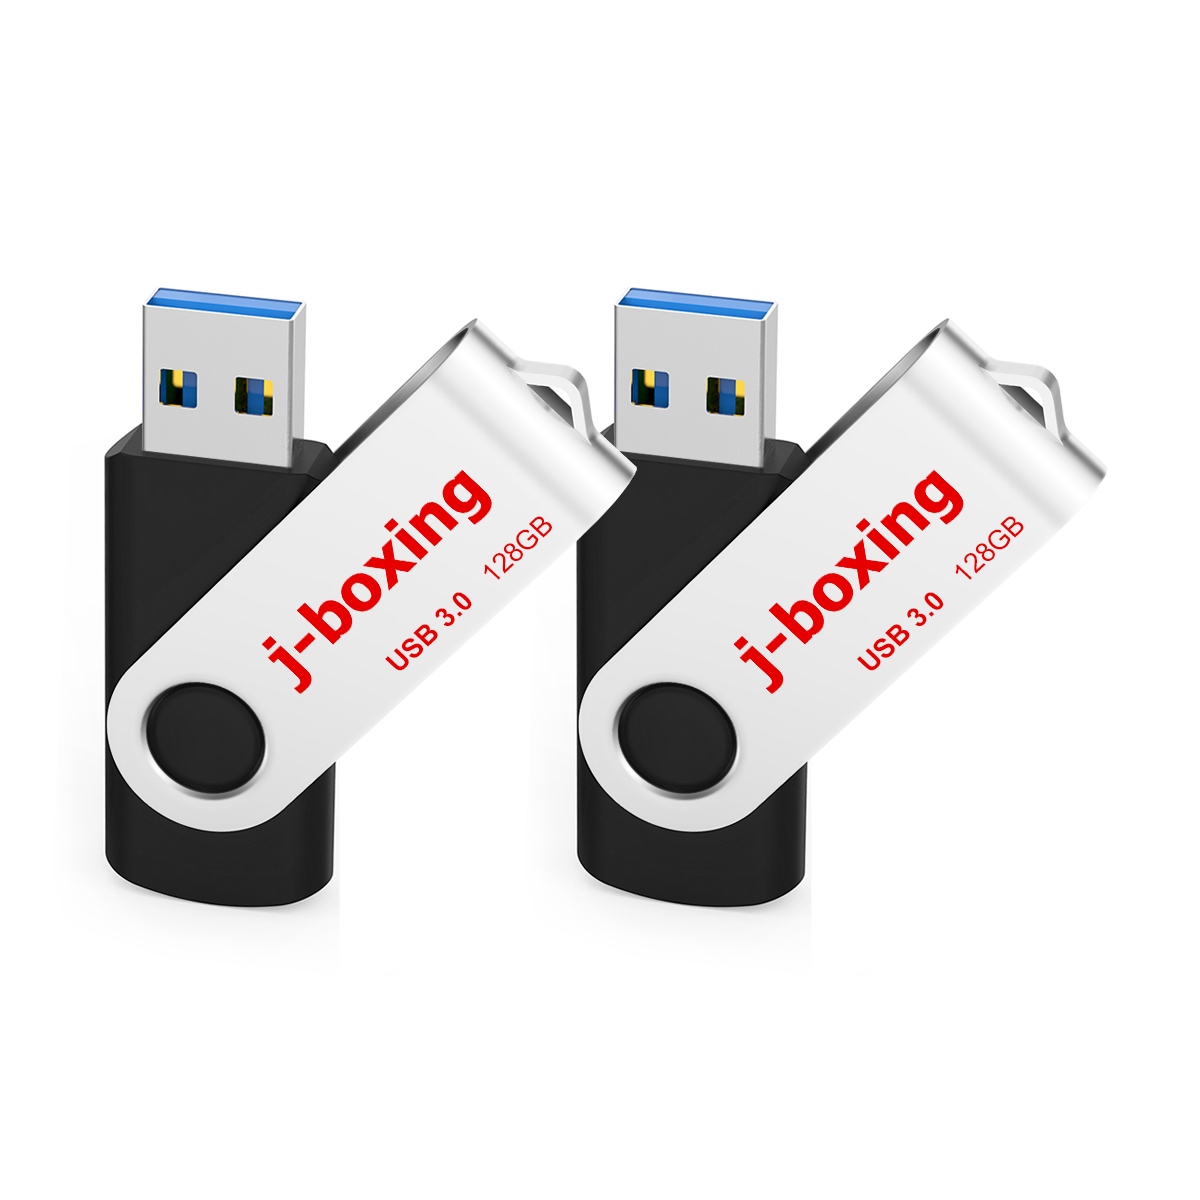 2 pacotes de unidades flash USB de 128 GB 3.0 Thumb Memory Stick 128 GB de alta velocidade para computador desktop laptop armazenamento de dados